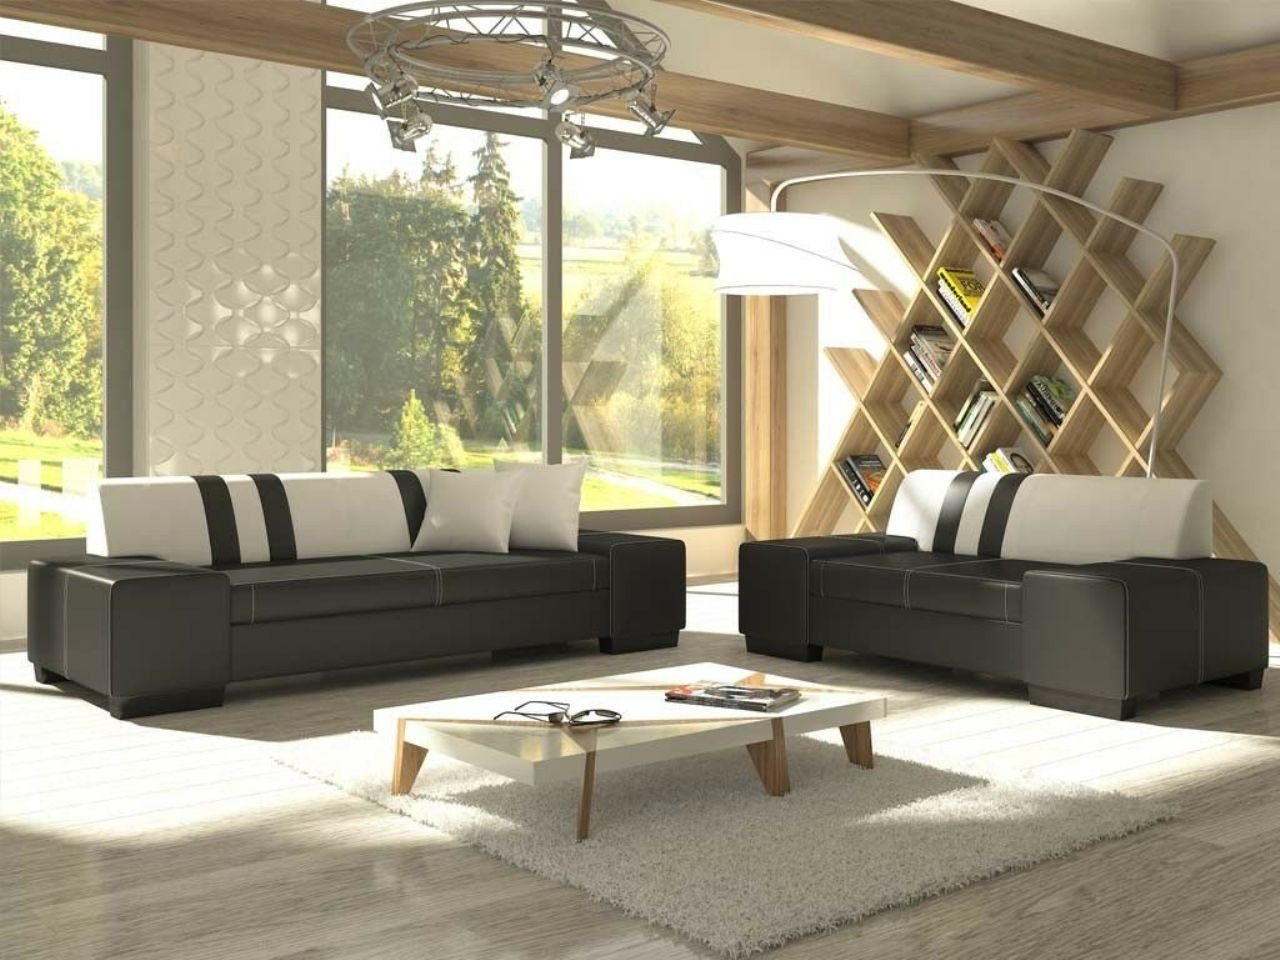 JVmoebel Sofa Premium dunkelgraue Sofagarnitur 3+2 Sitzer luxus Couch Set Neu, Made in Europe Schwarz / Weiß